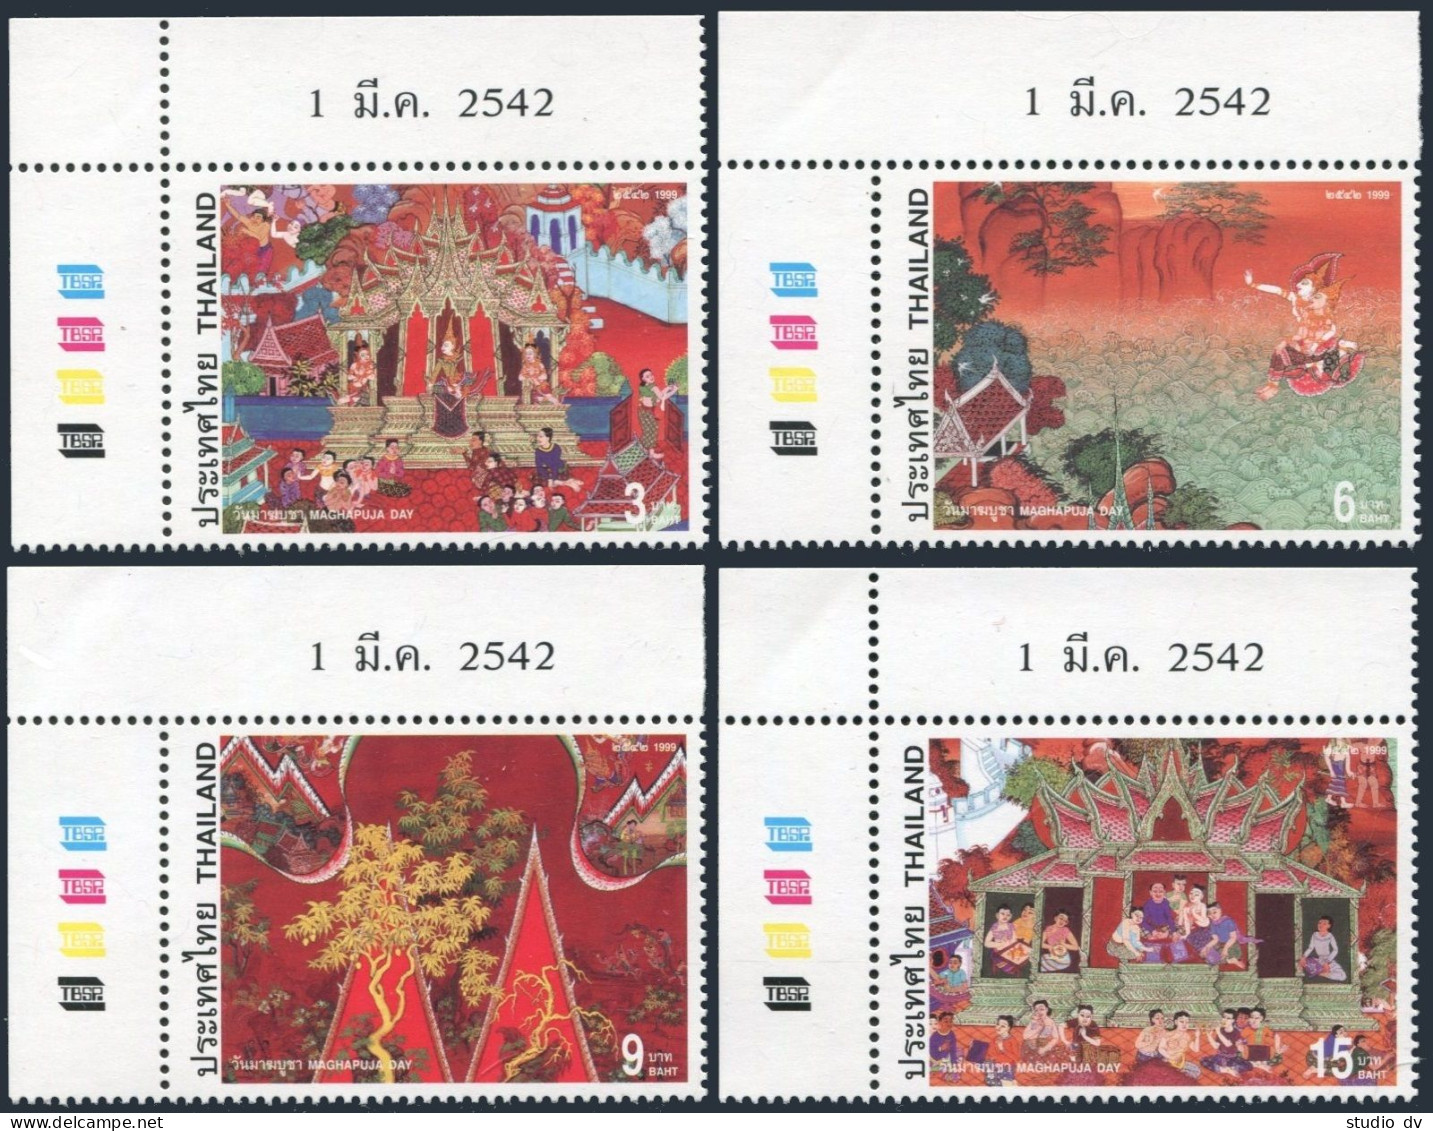 Thailand 1856-1859,1859a Sheet,MNH. Buddhist Holiday Maghapuja Day,1999. - Tailandia